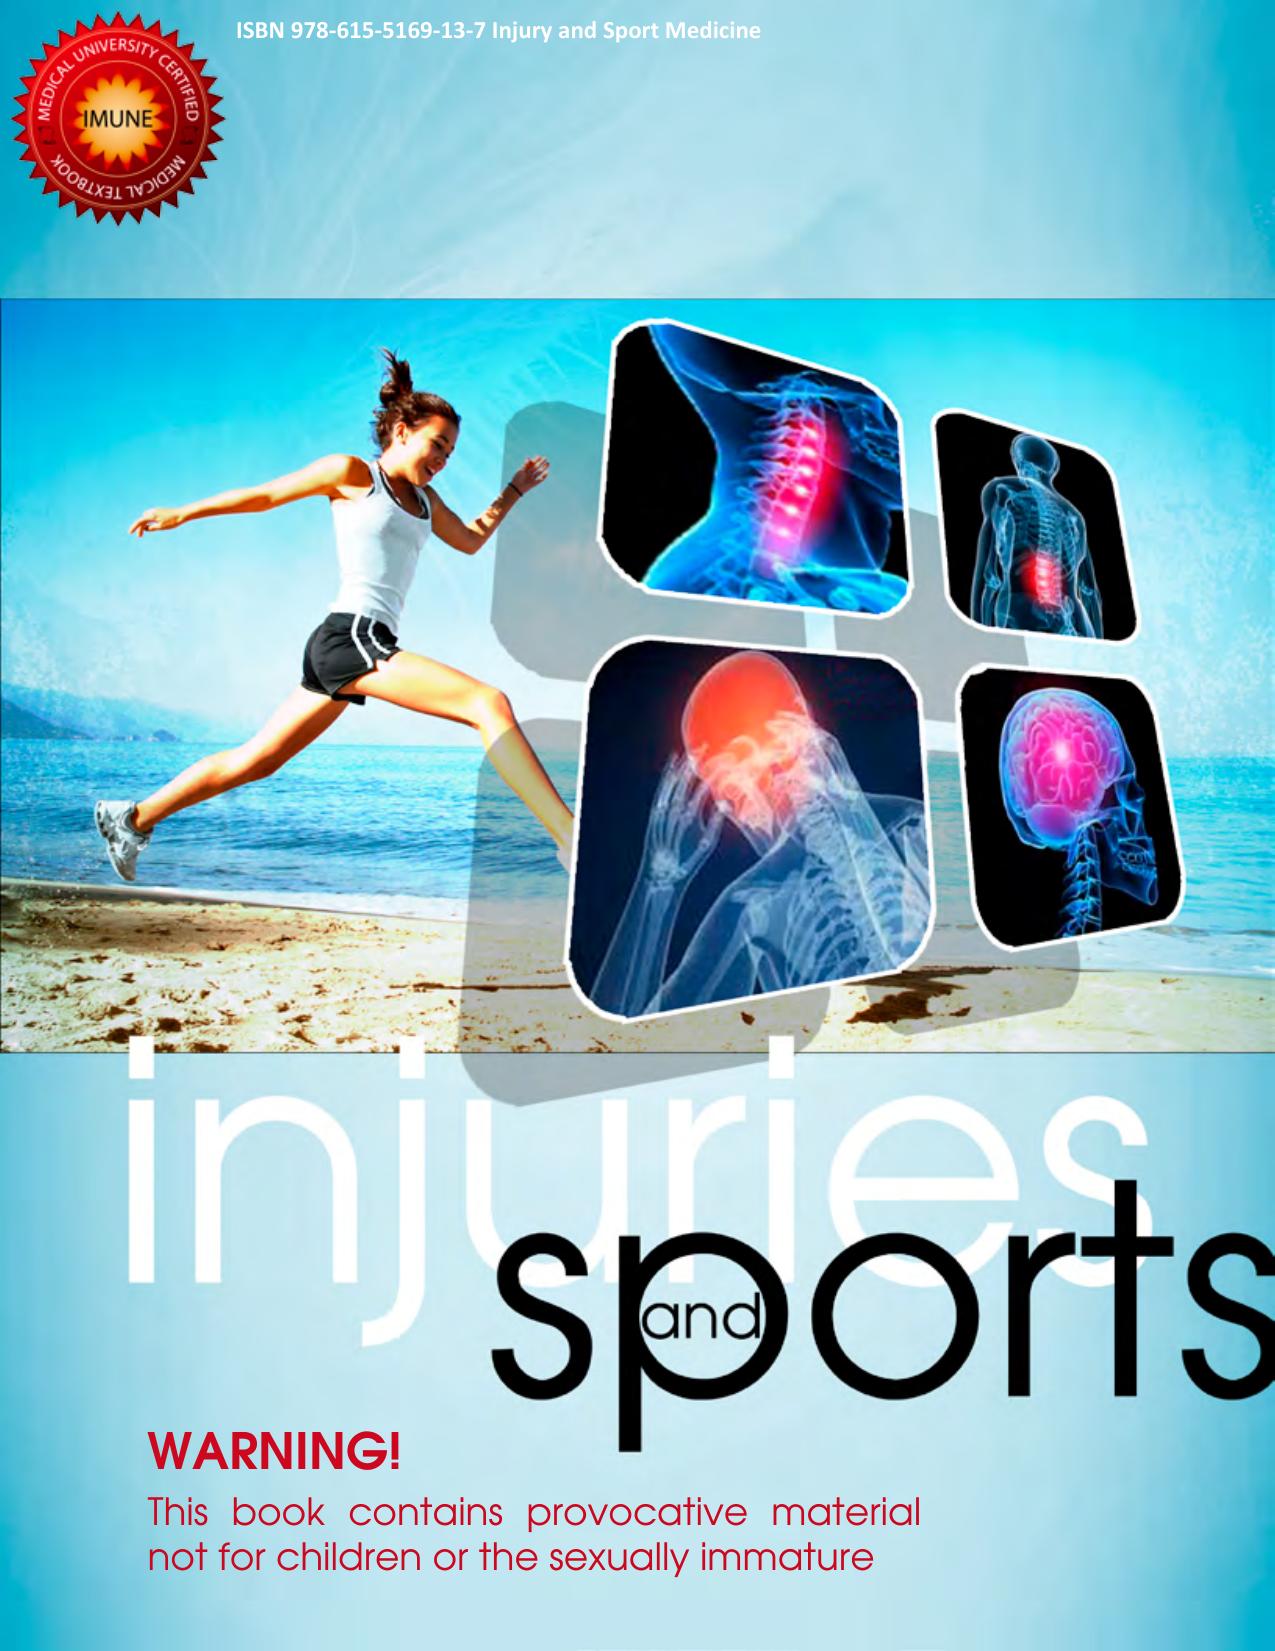 Injury and Sport Medicine (warning)